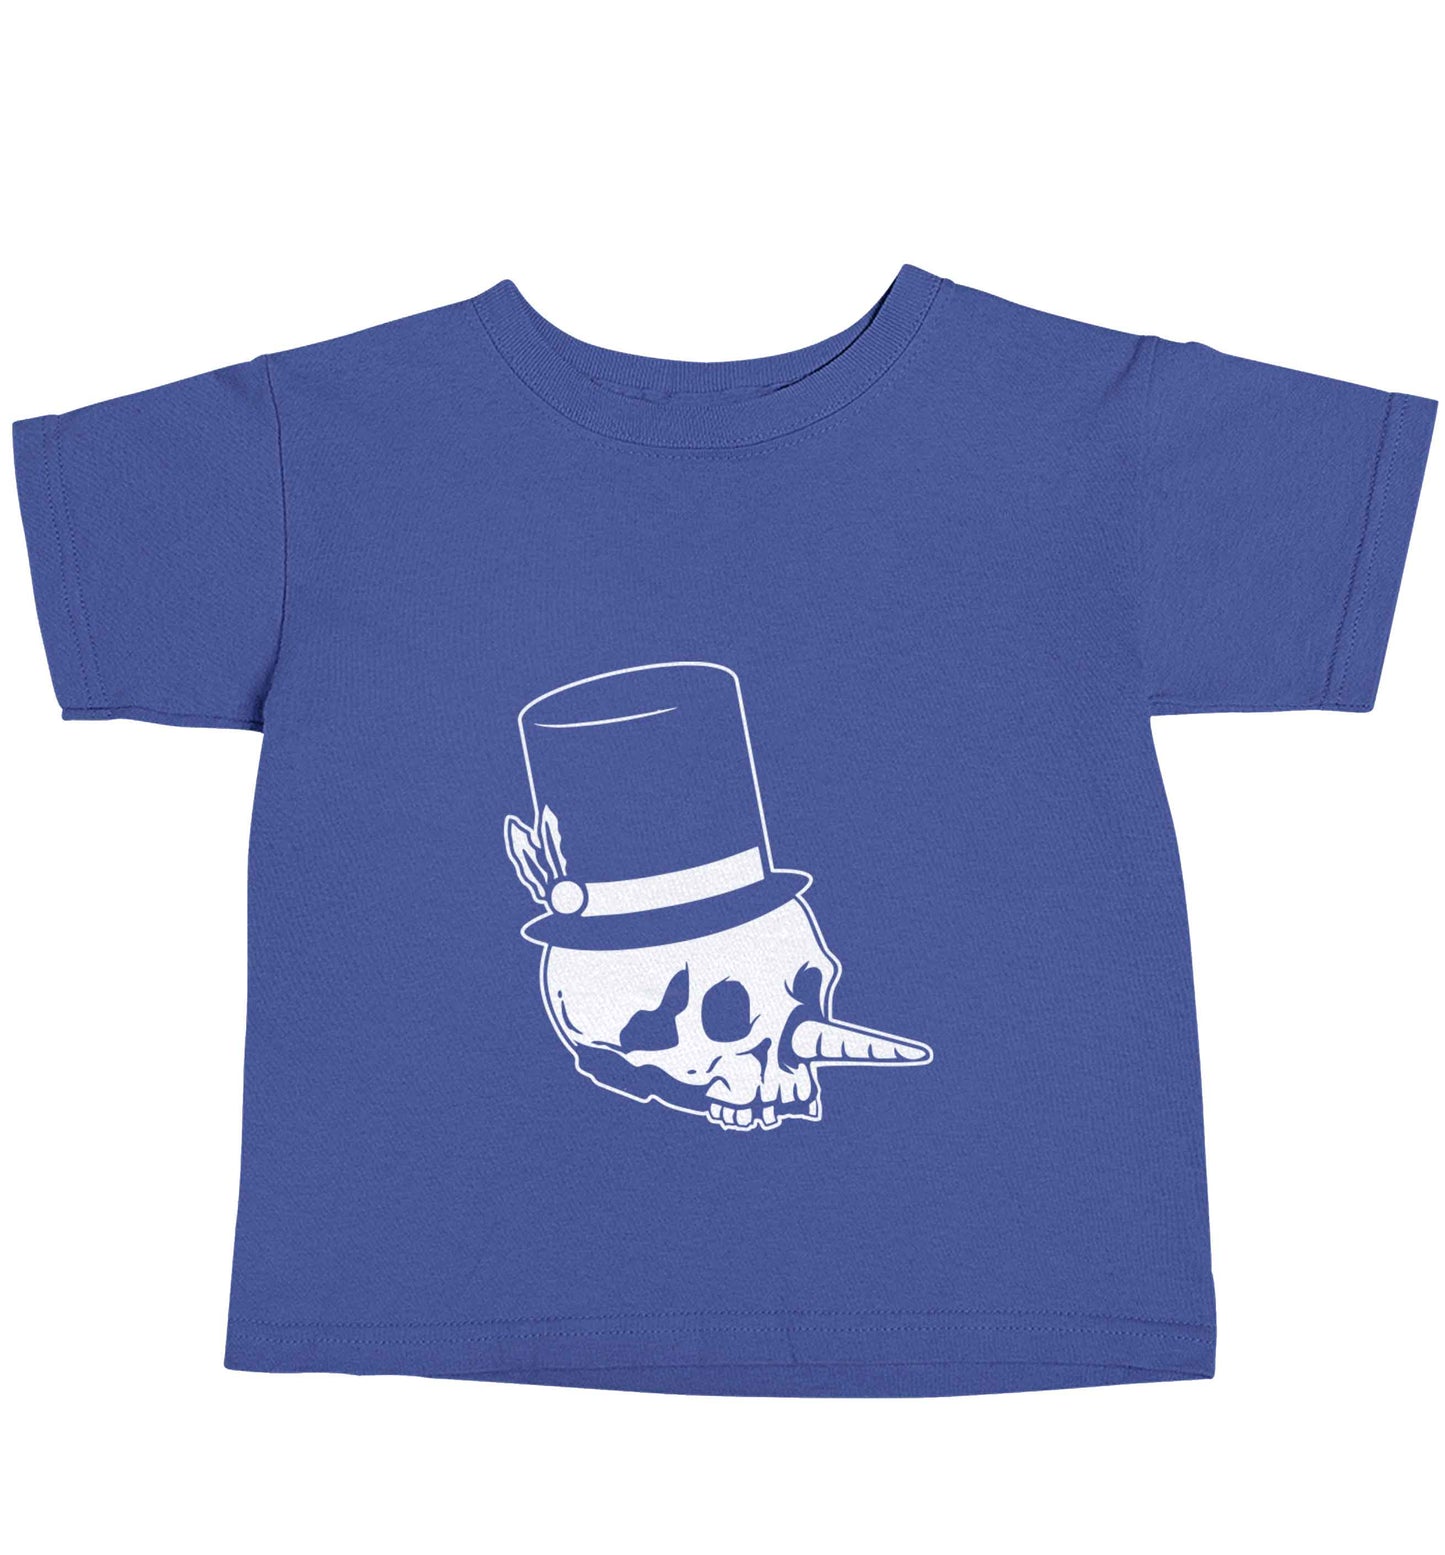 Snowman punk blue baby toddler Tshirt 2 Years